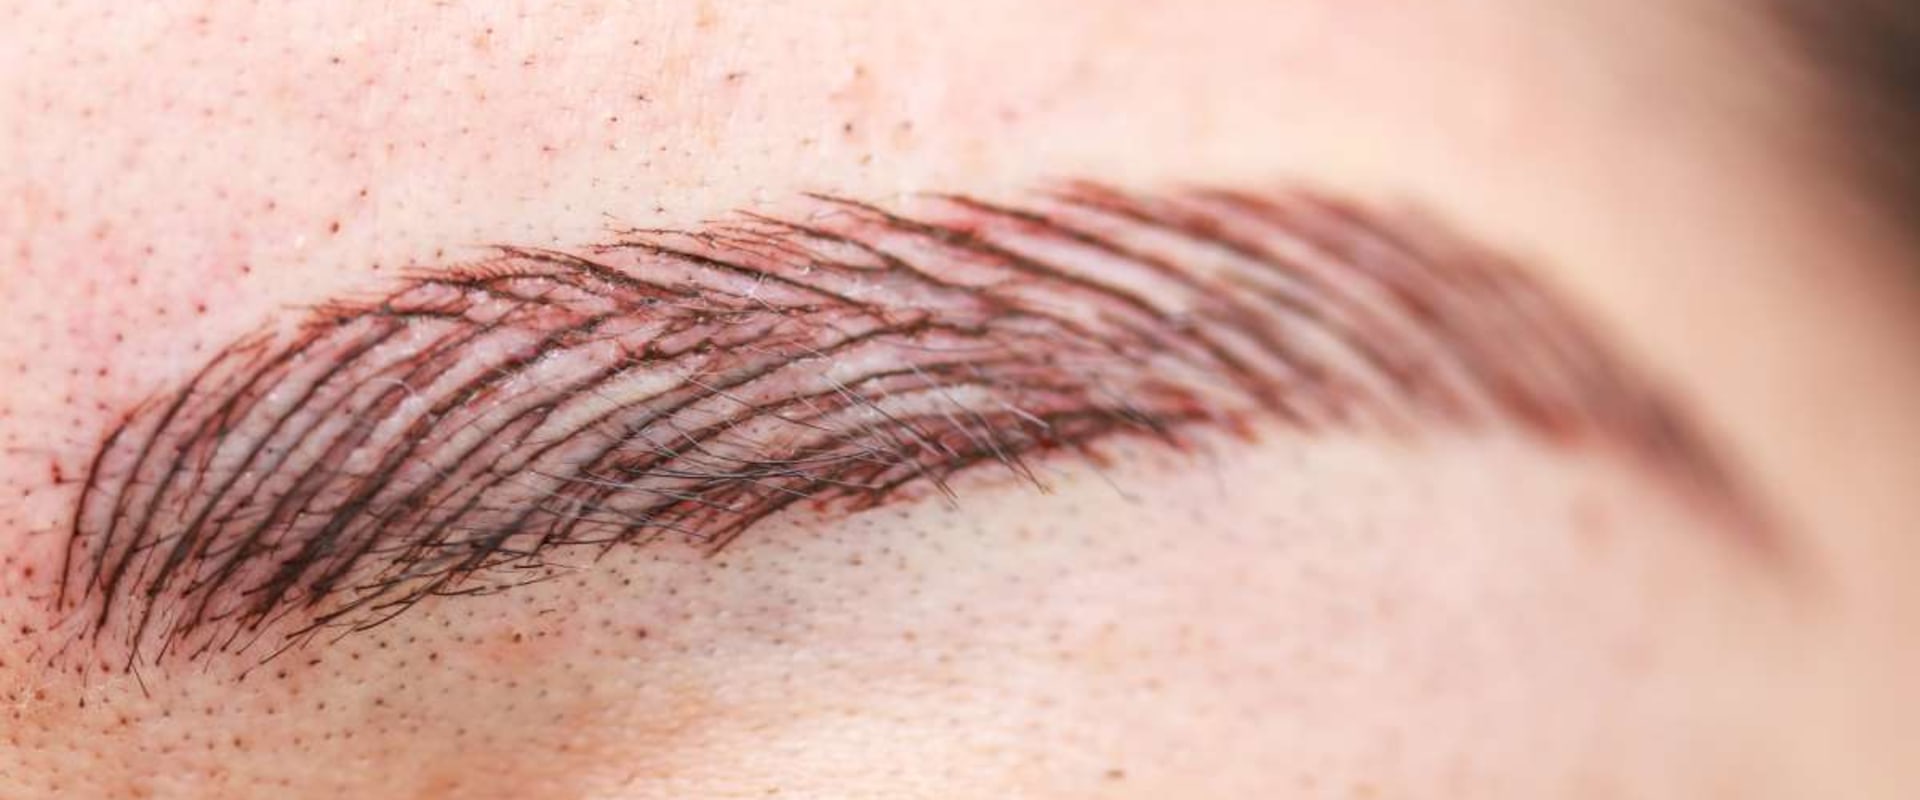 Do makeup tattoos fade?